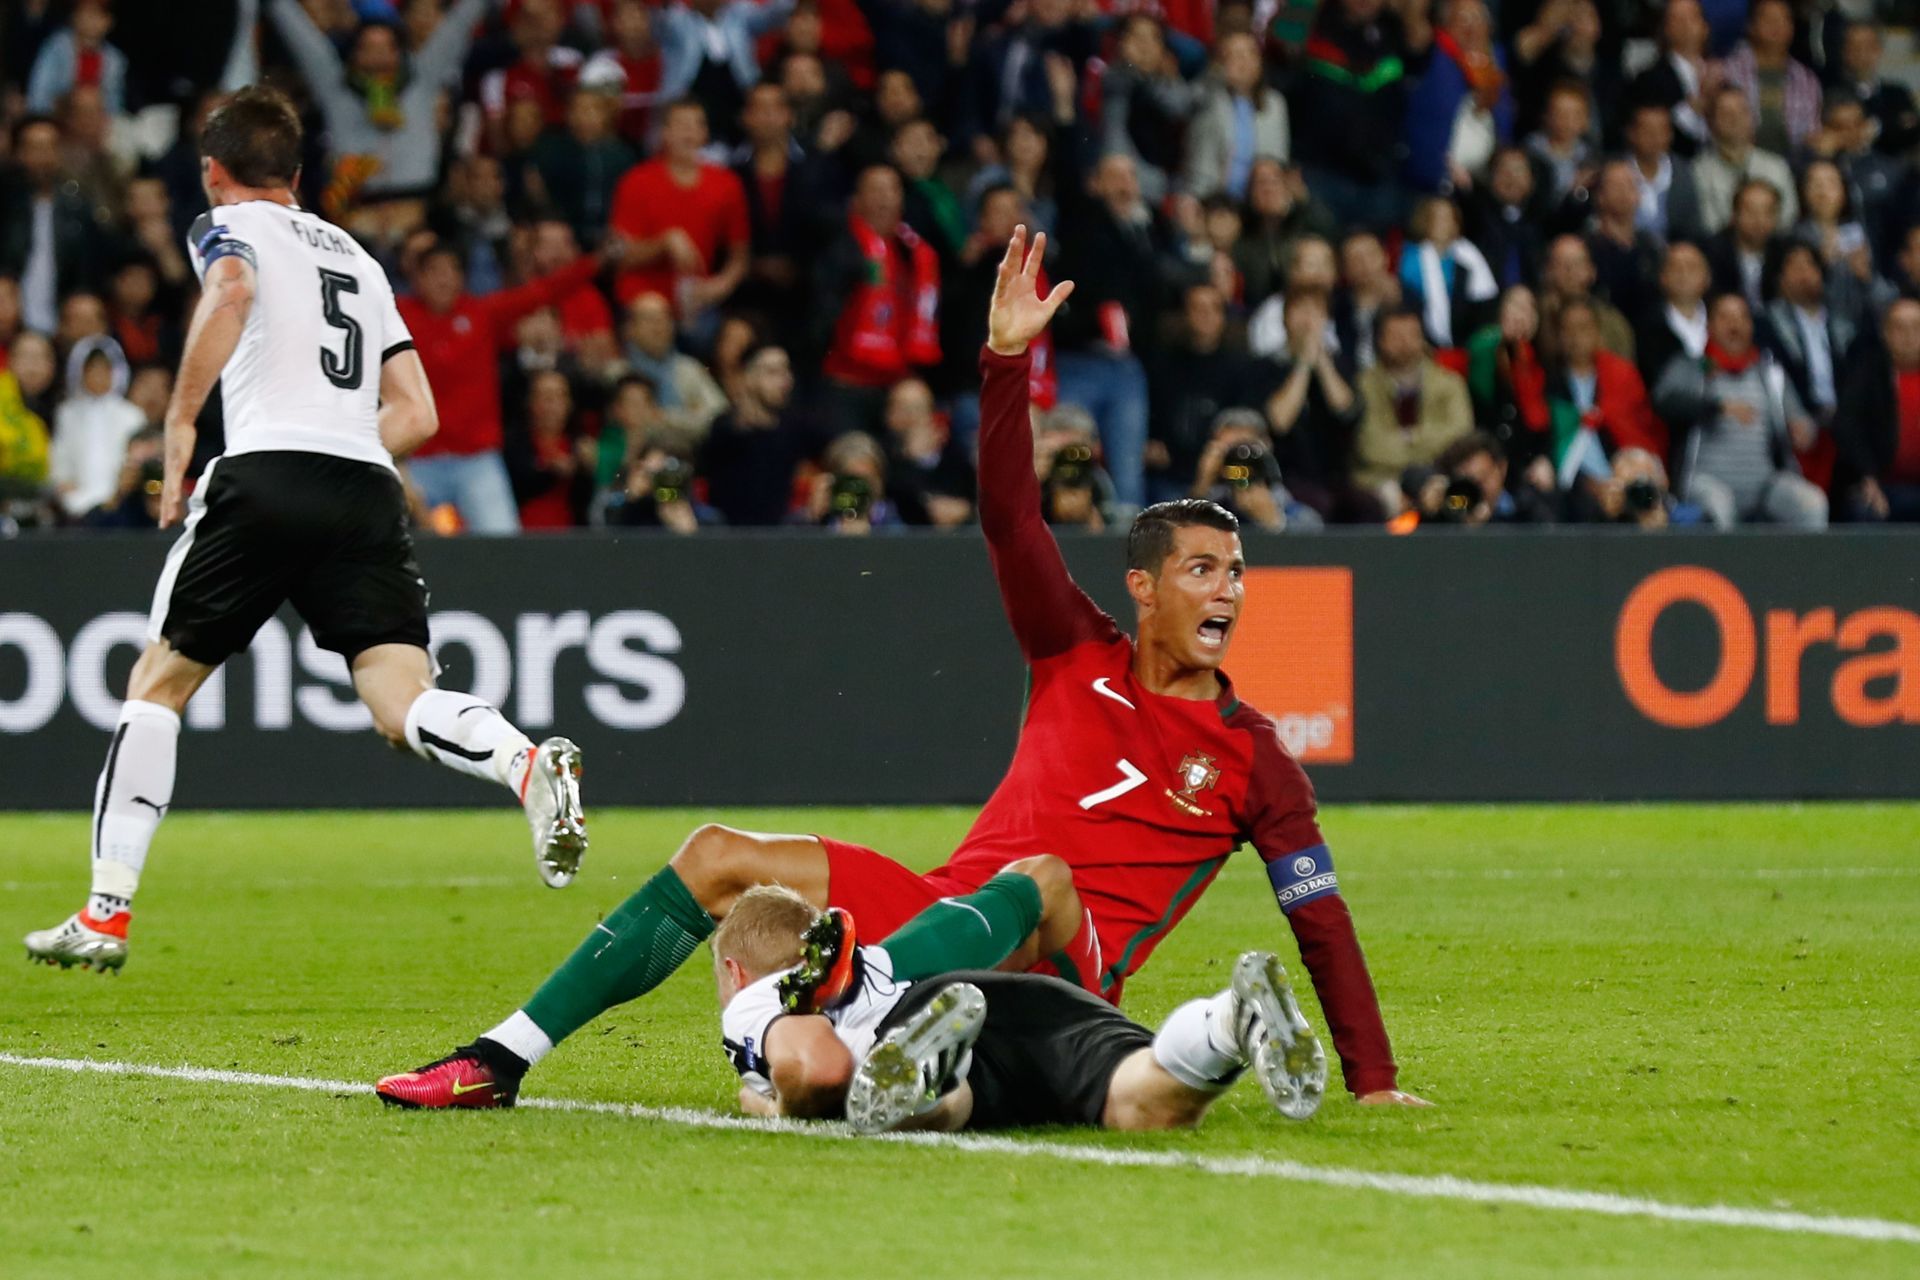 Portugal v Austria - Group F: UEFA Euro 2016